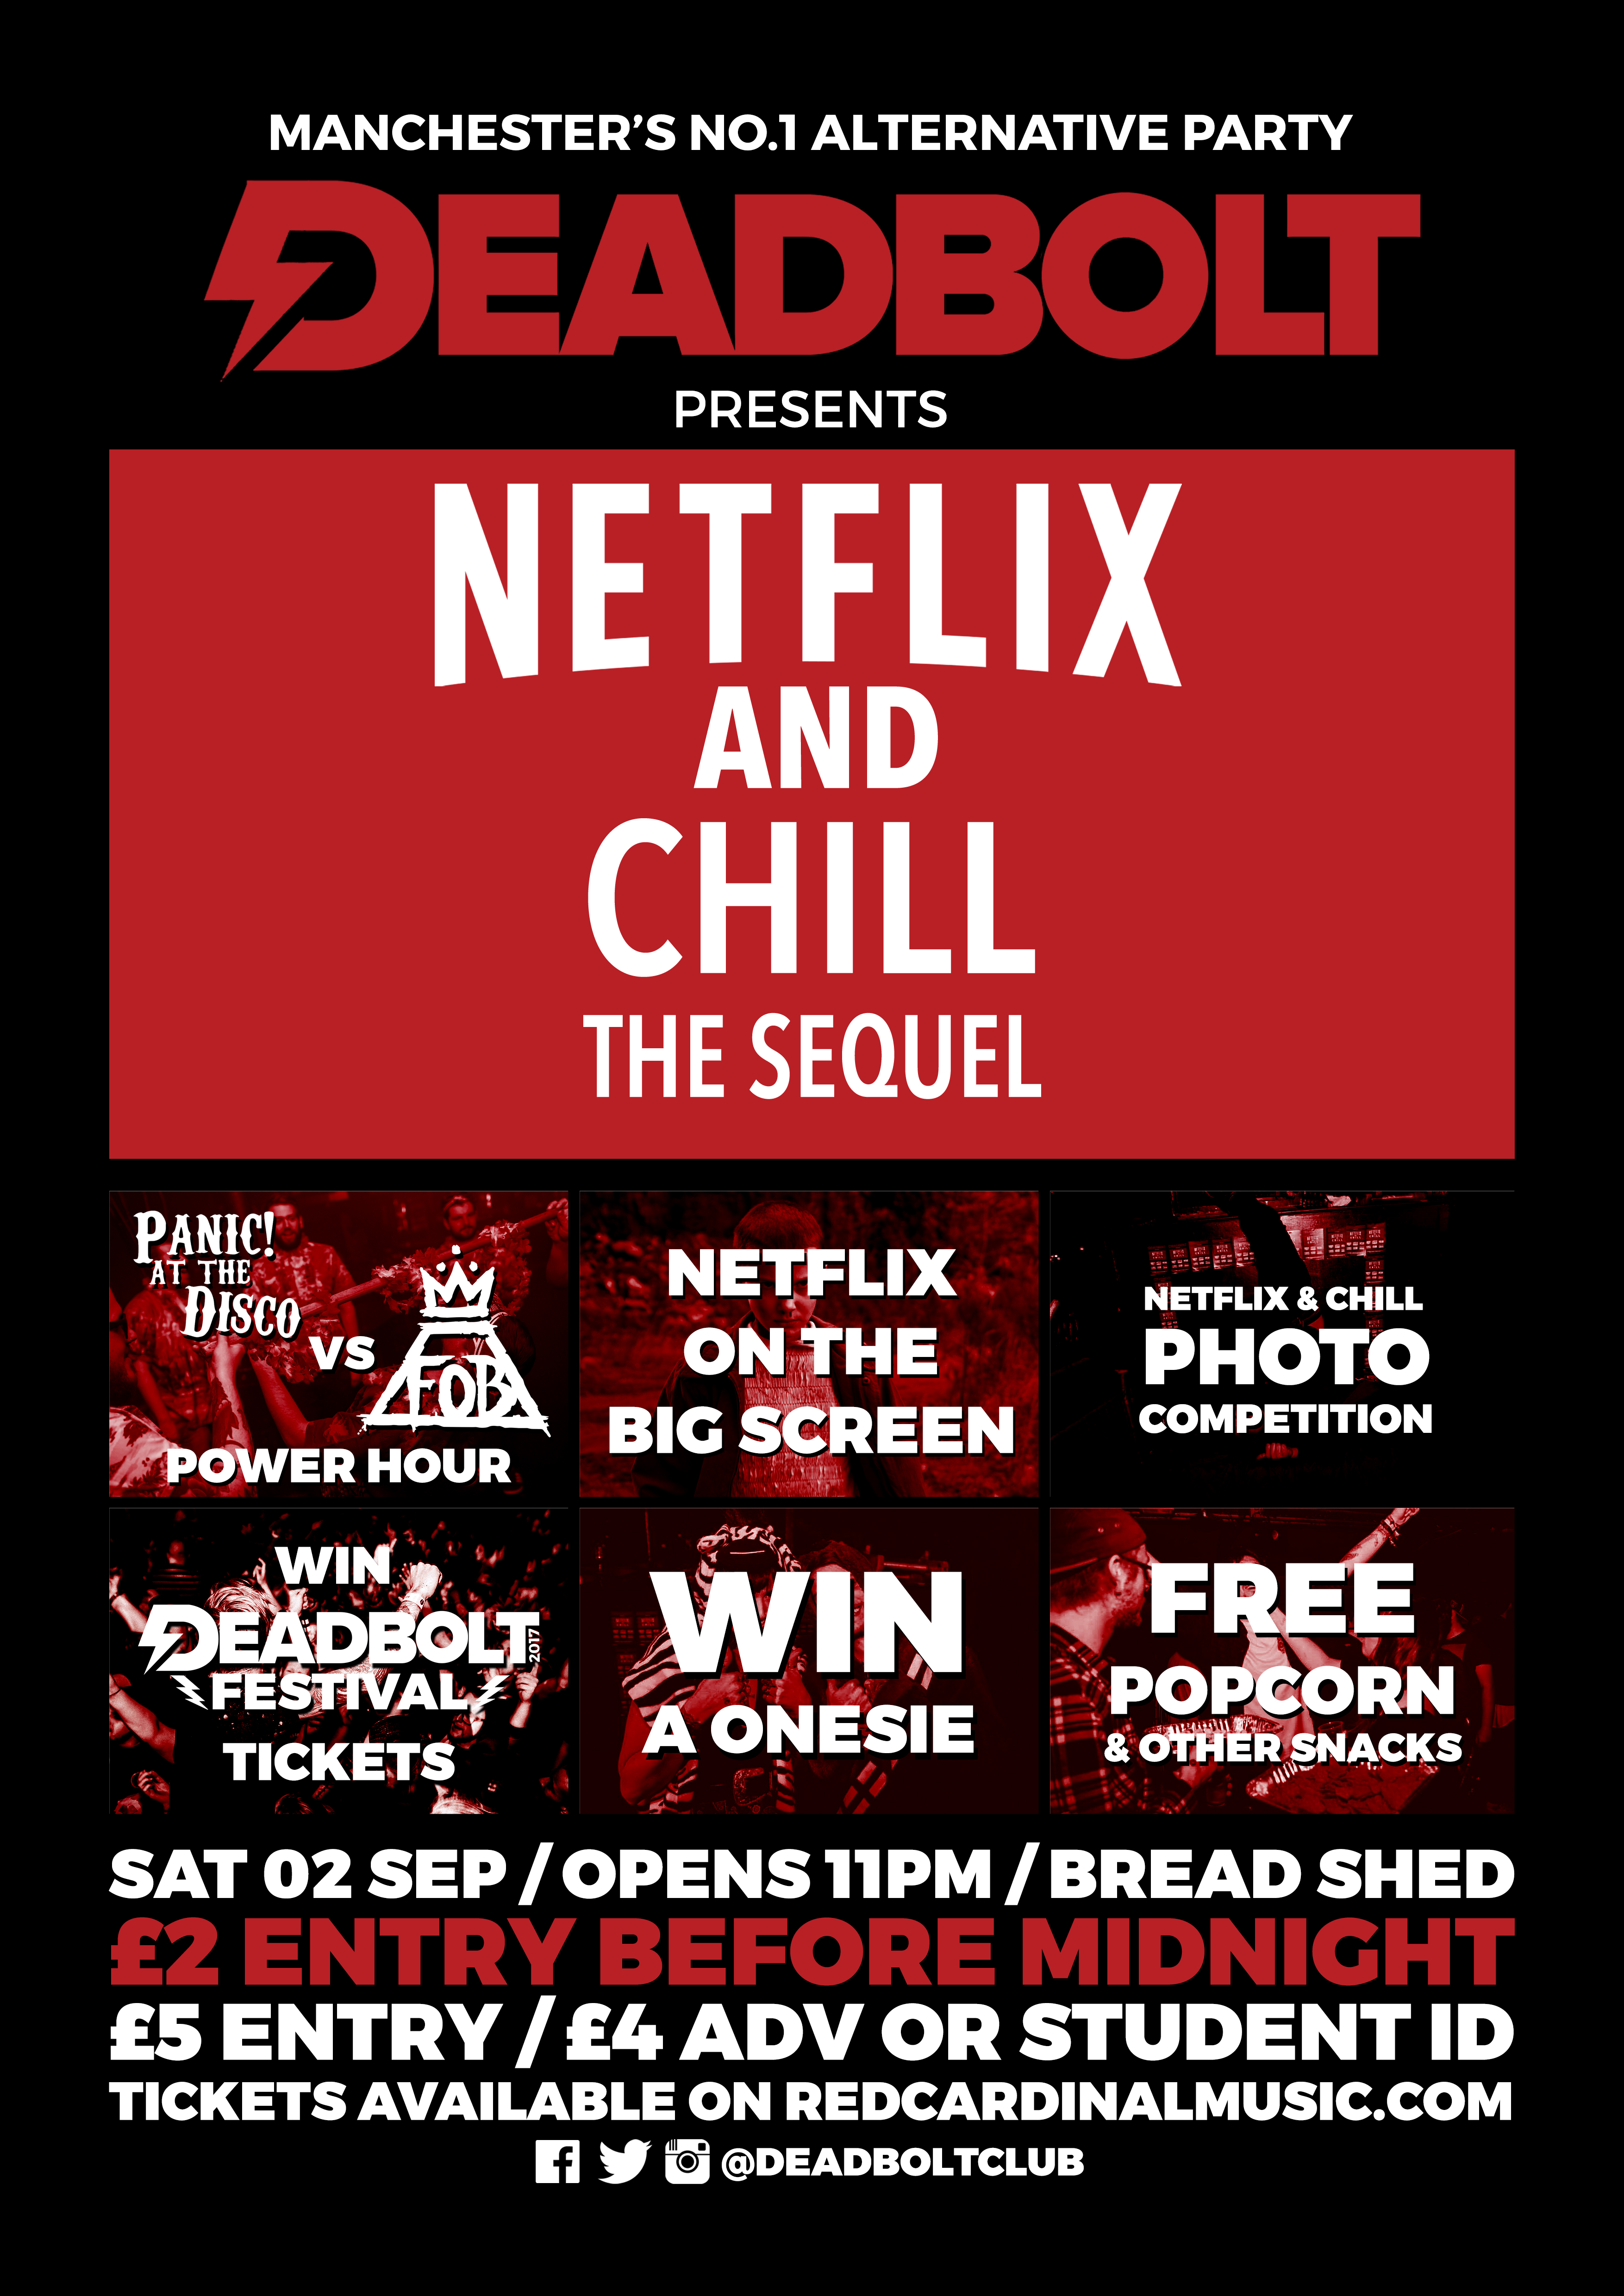 Deadbolt Netflix and Chill - Breadshed -Alternative Night Manchester - Red Cardinal Music